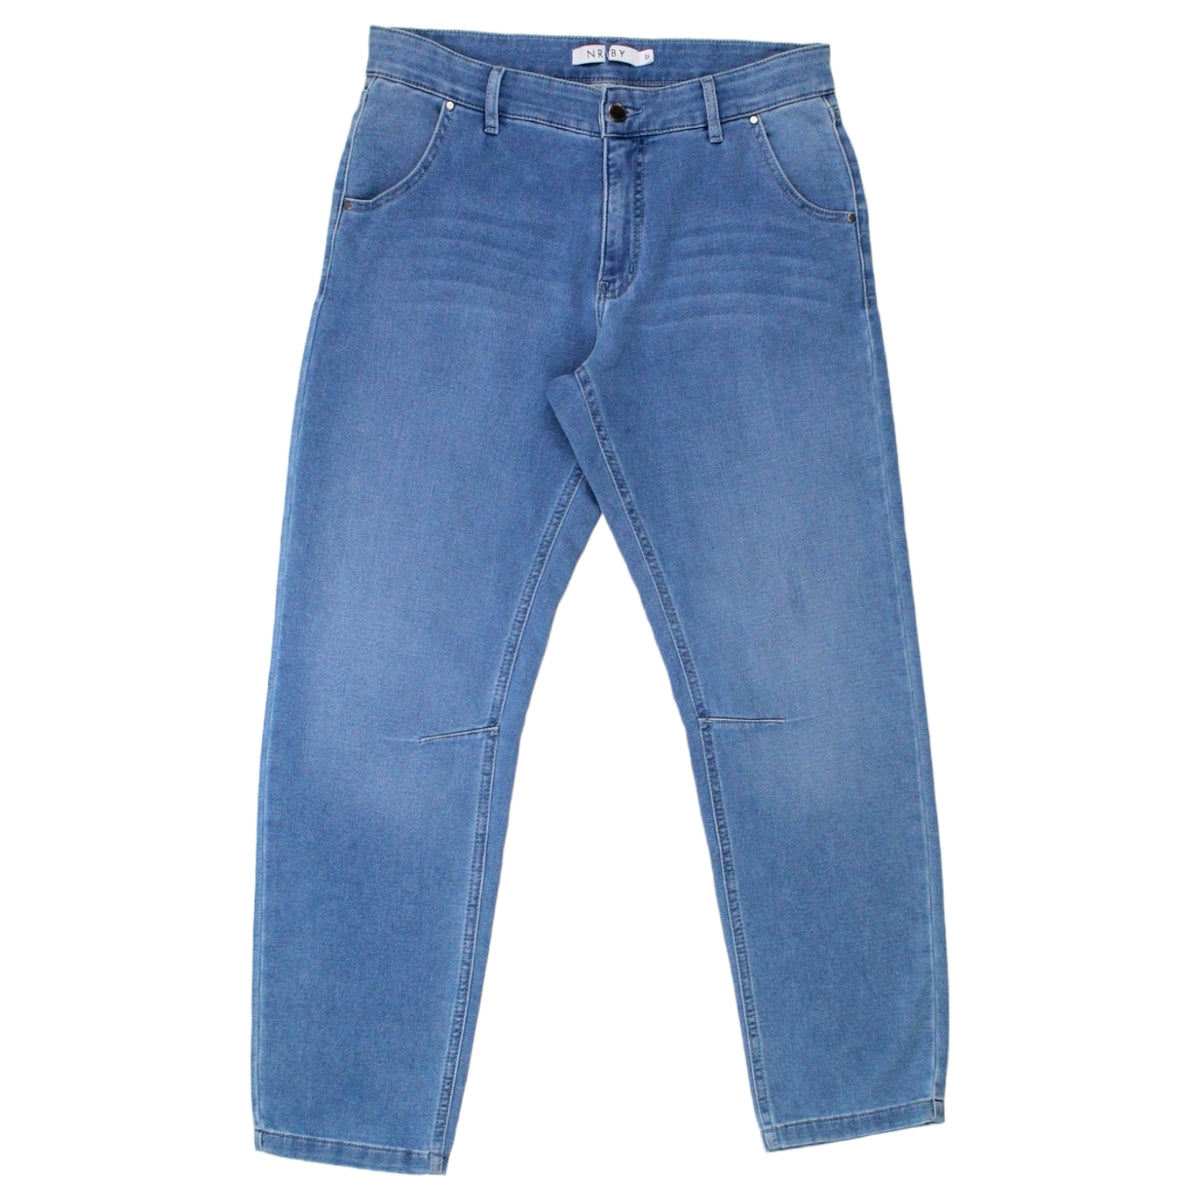 NRBY Blue Denim Ankle Length Jeans - Sample